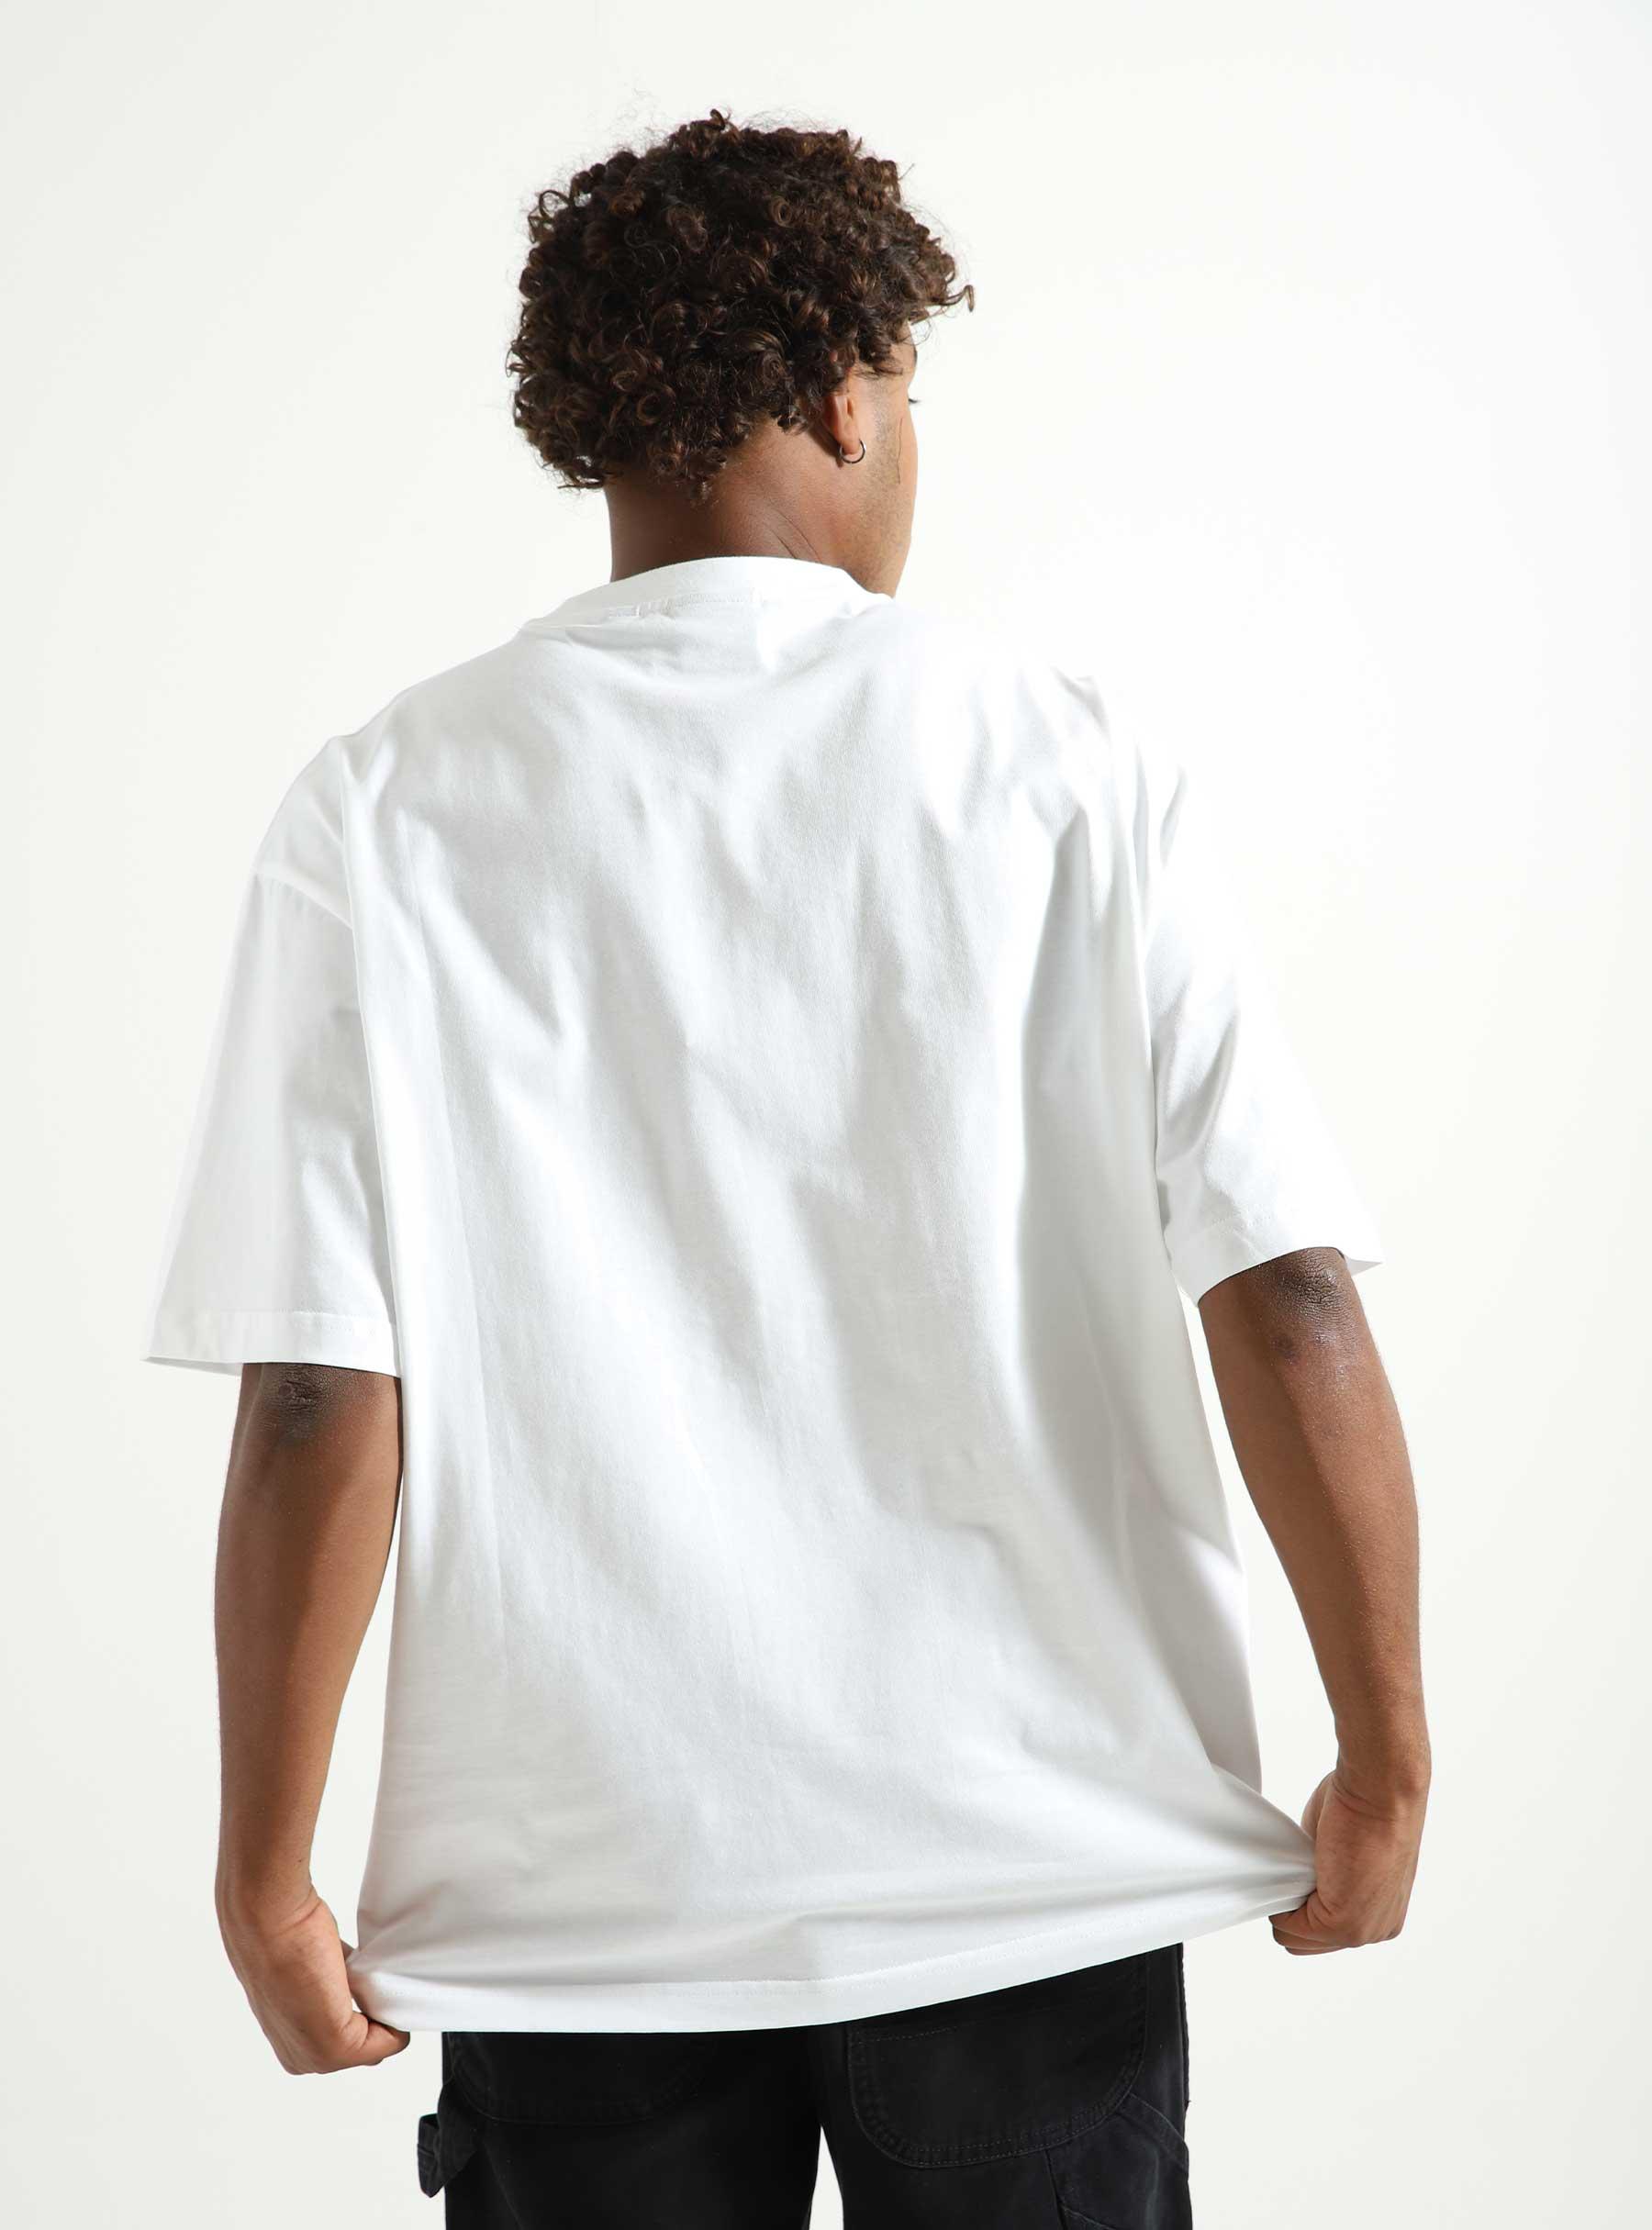 Rashad T-Shirt White 2321106